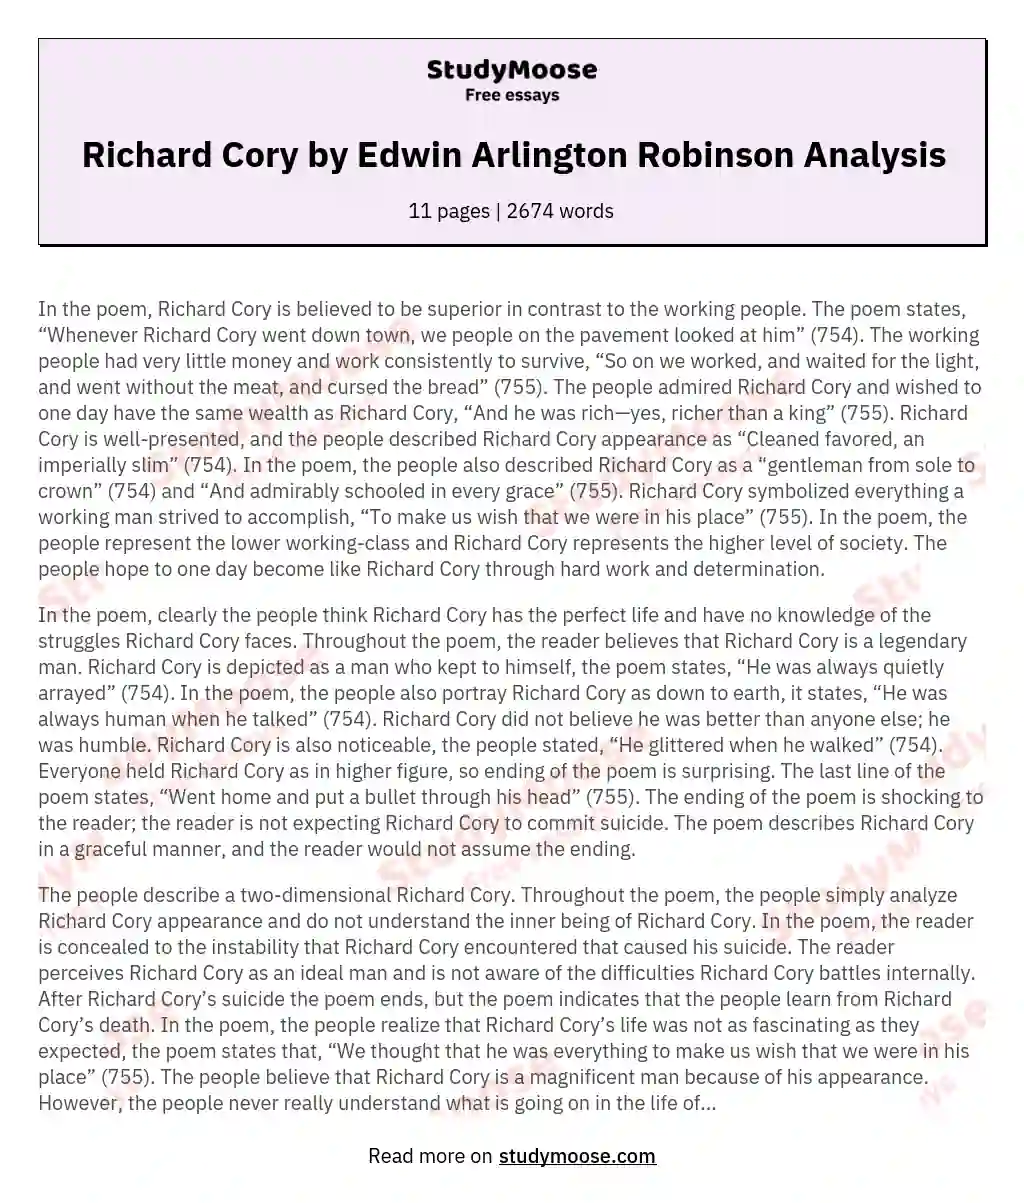 Richard Cory by Edwin Arlington Robinson Analysis